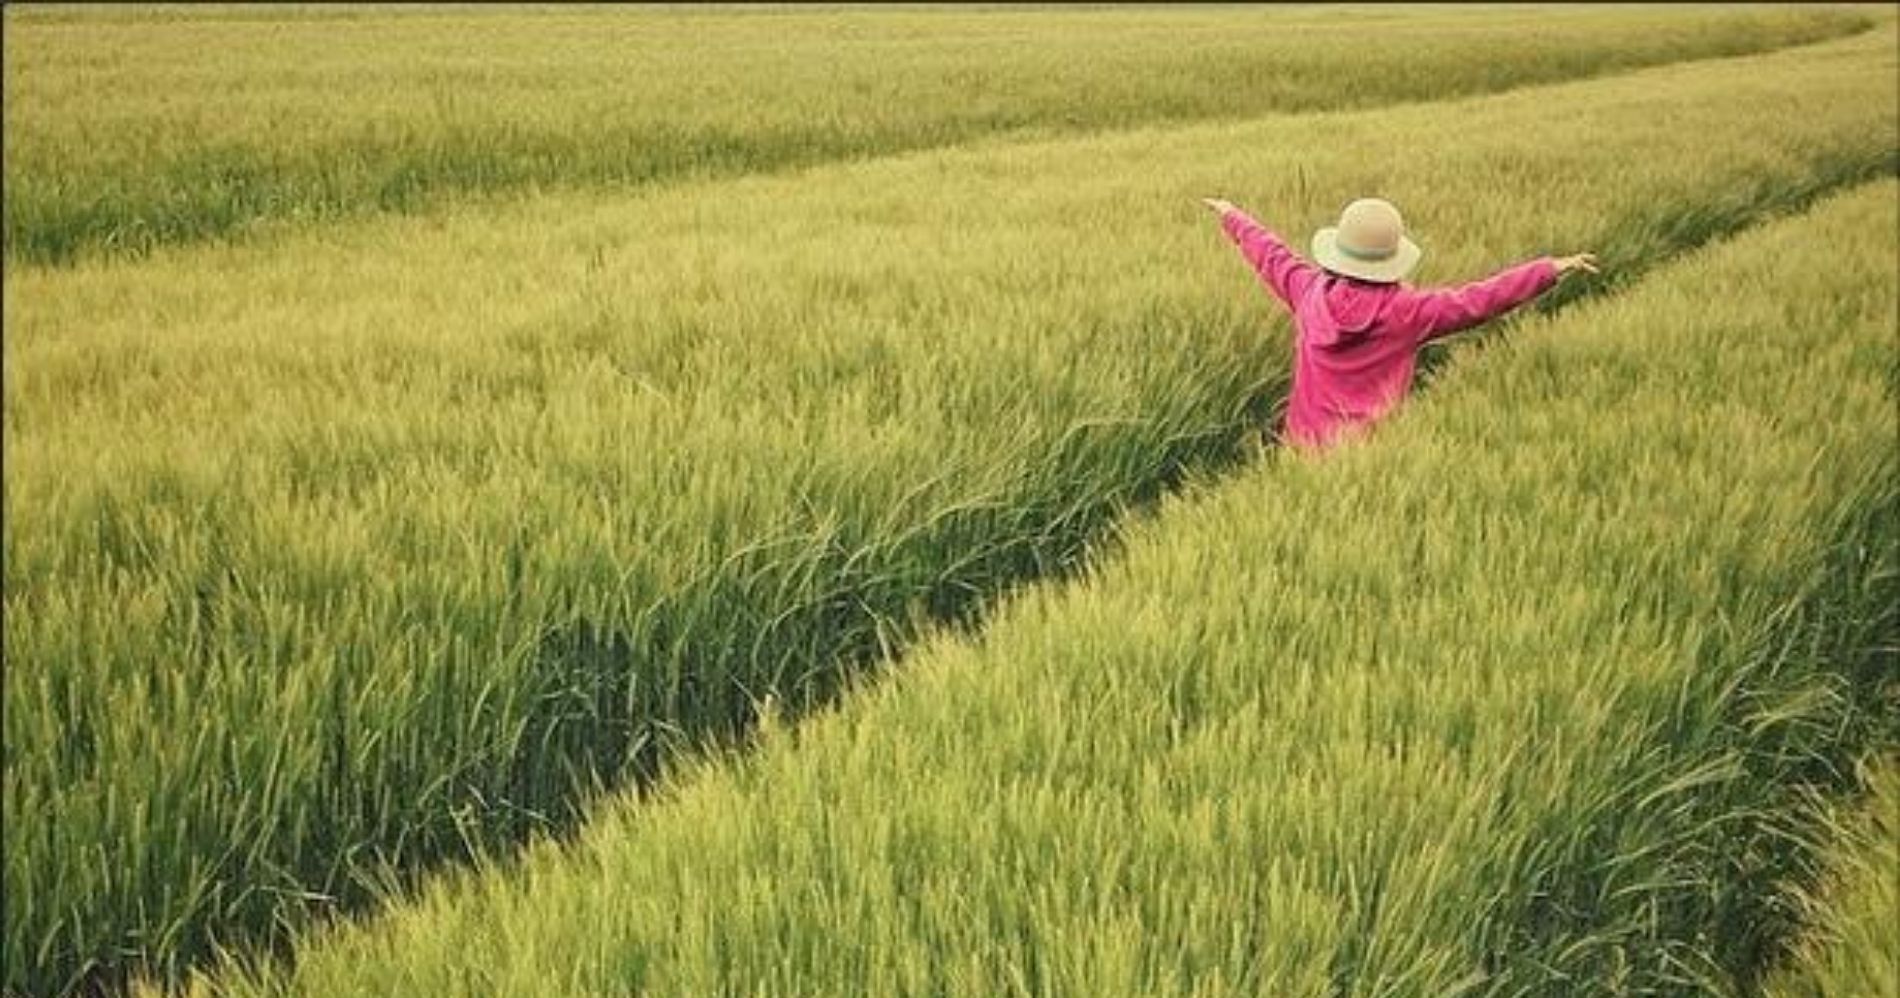 Rice Field - Image: Canva